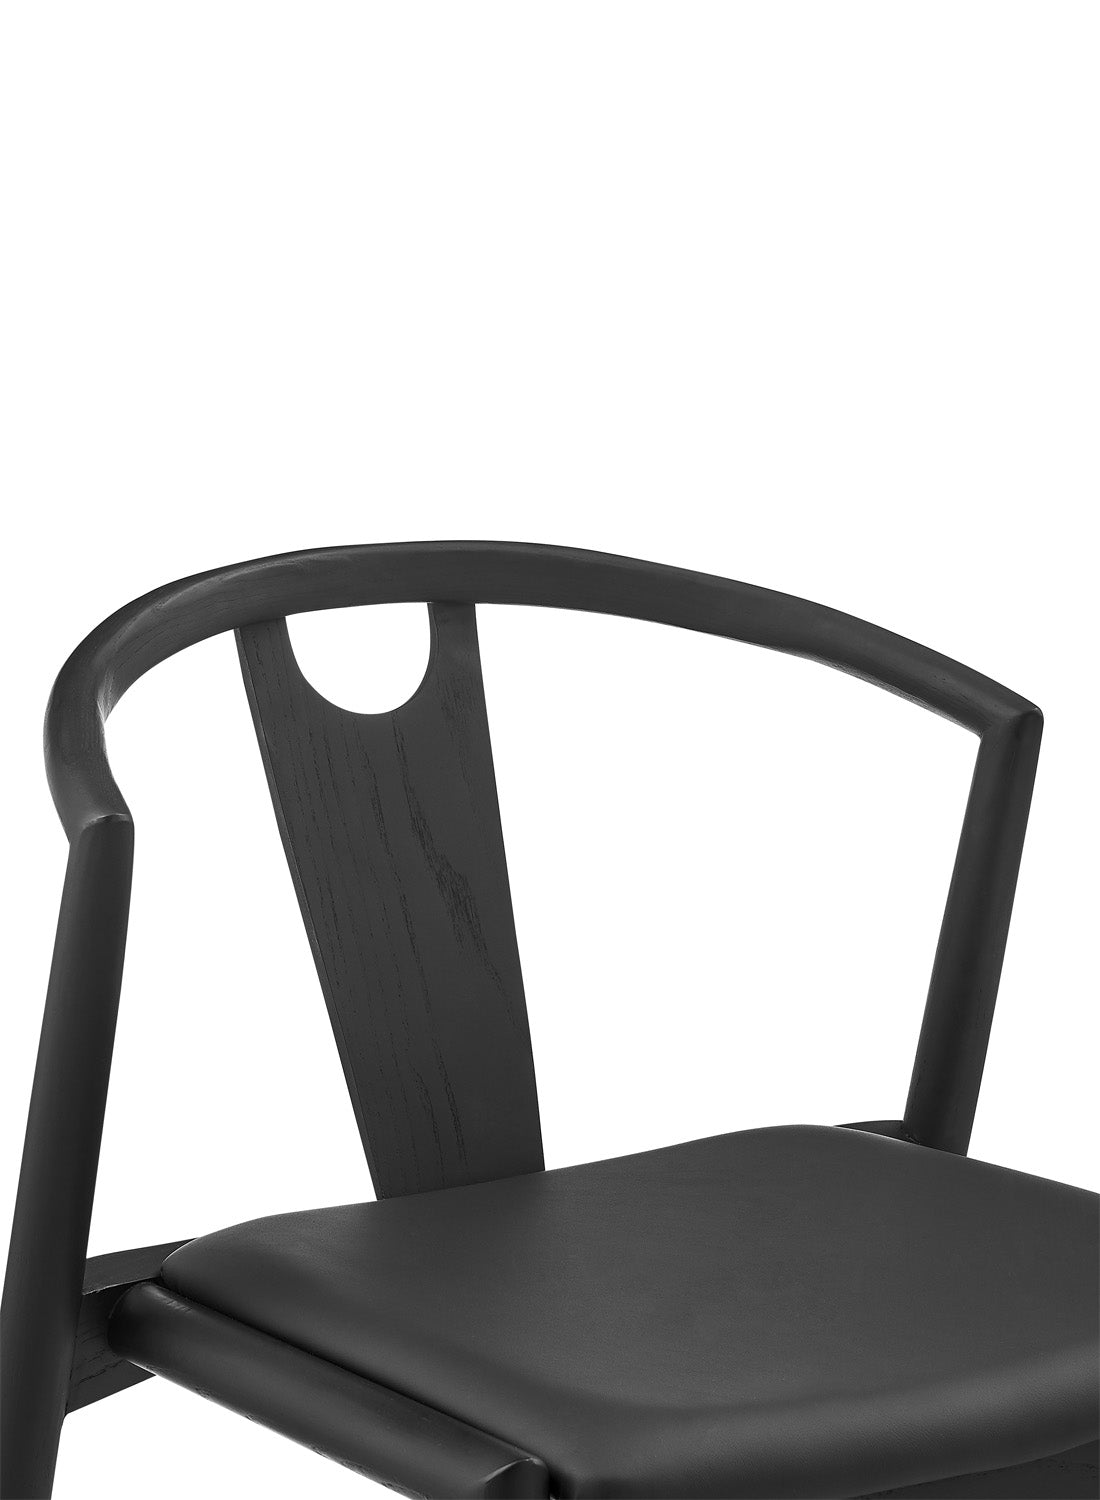 Arcadia Dining Chair, black